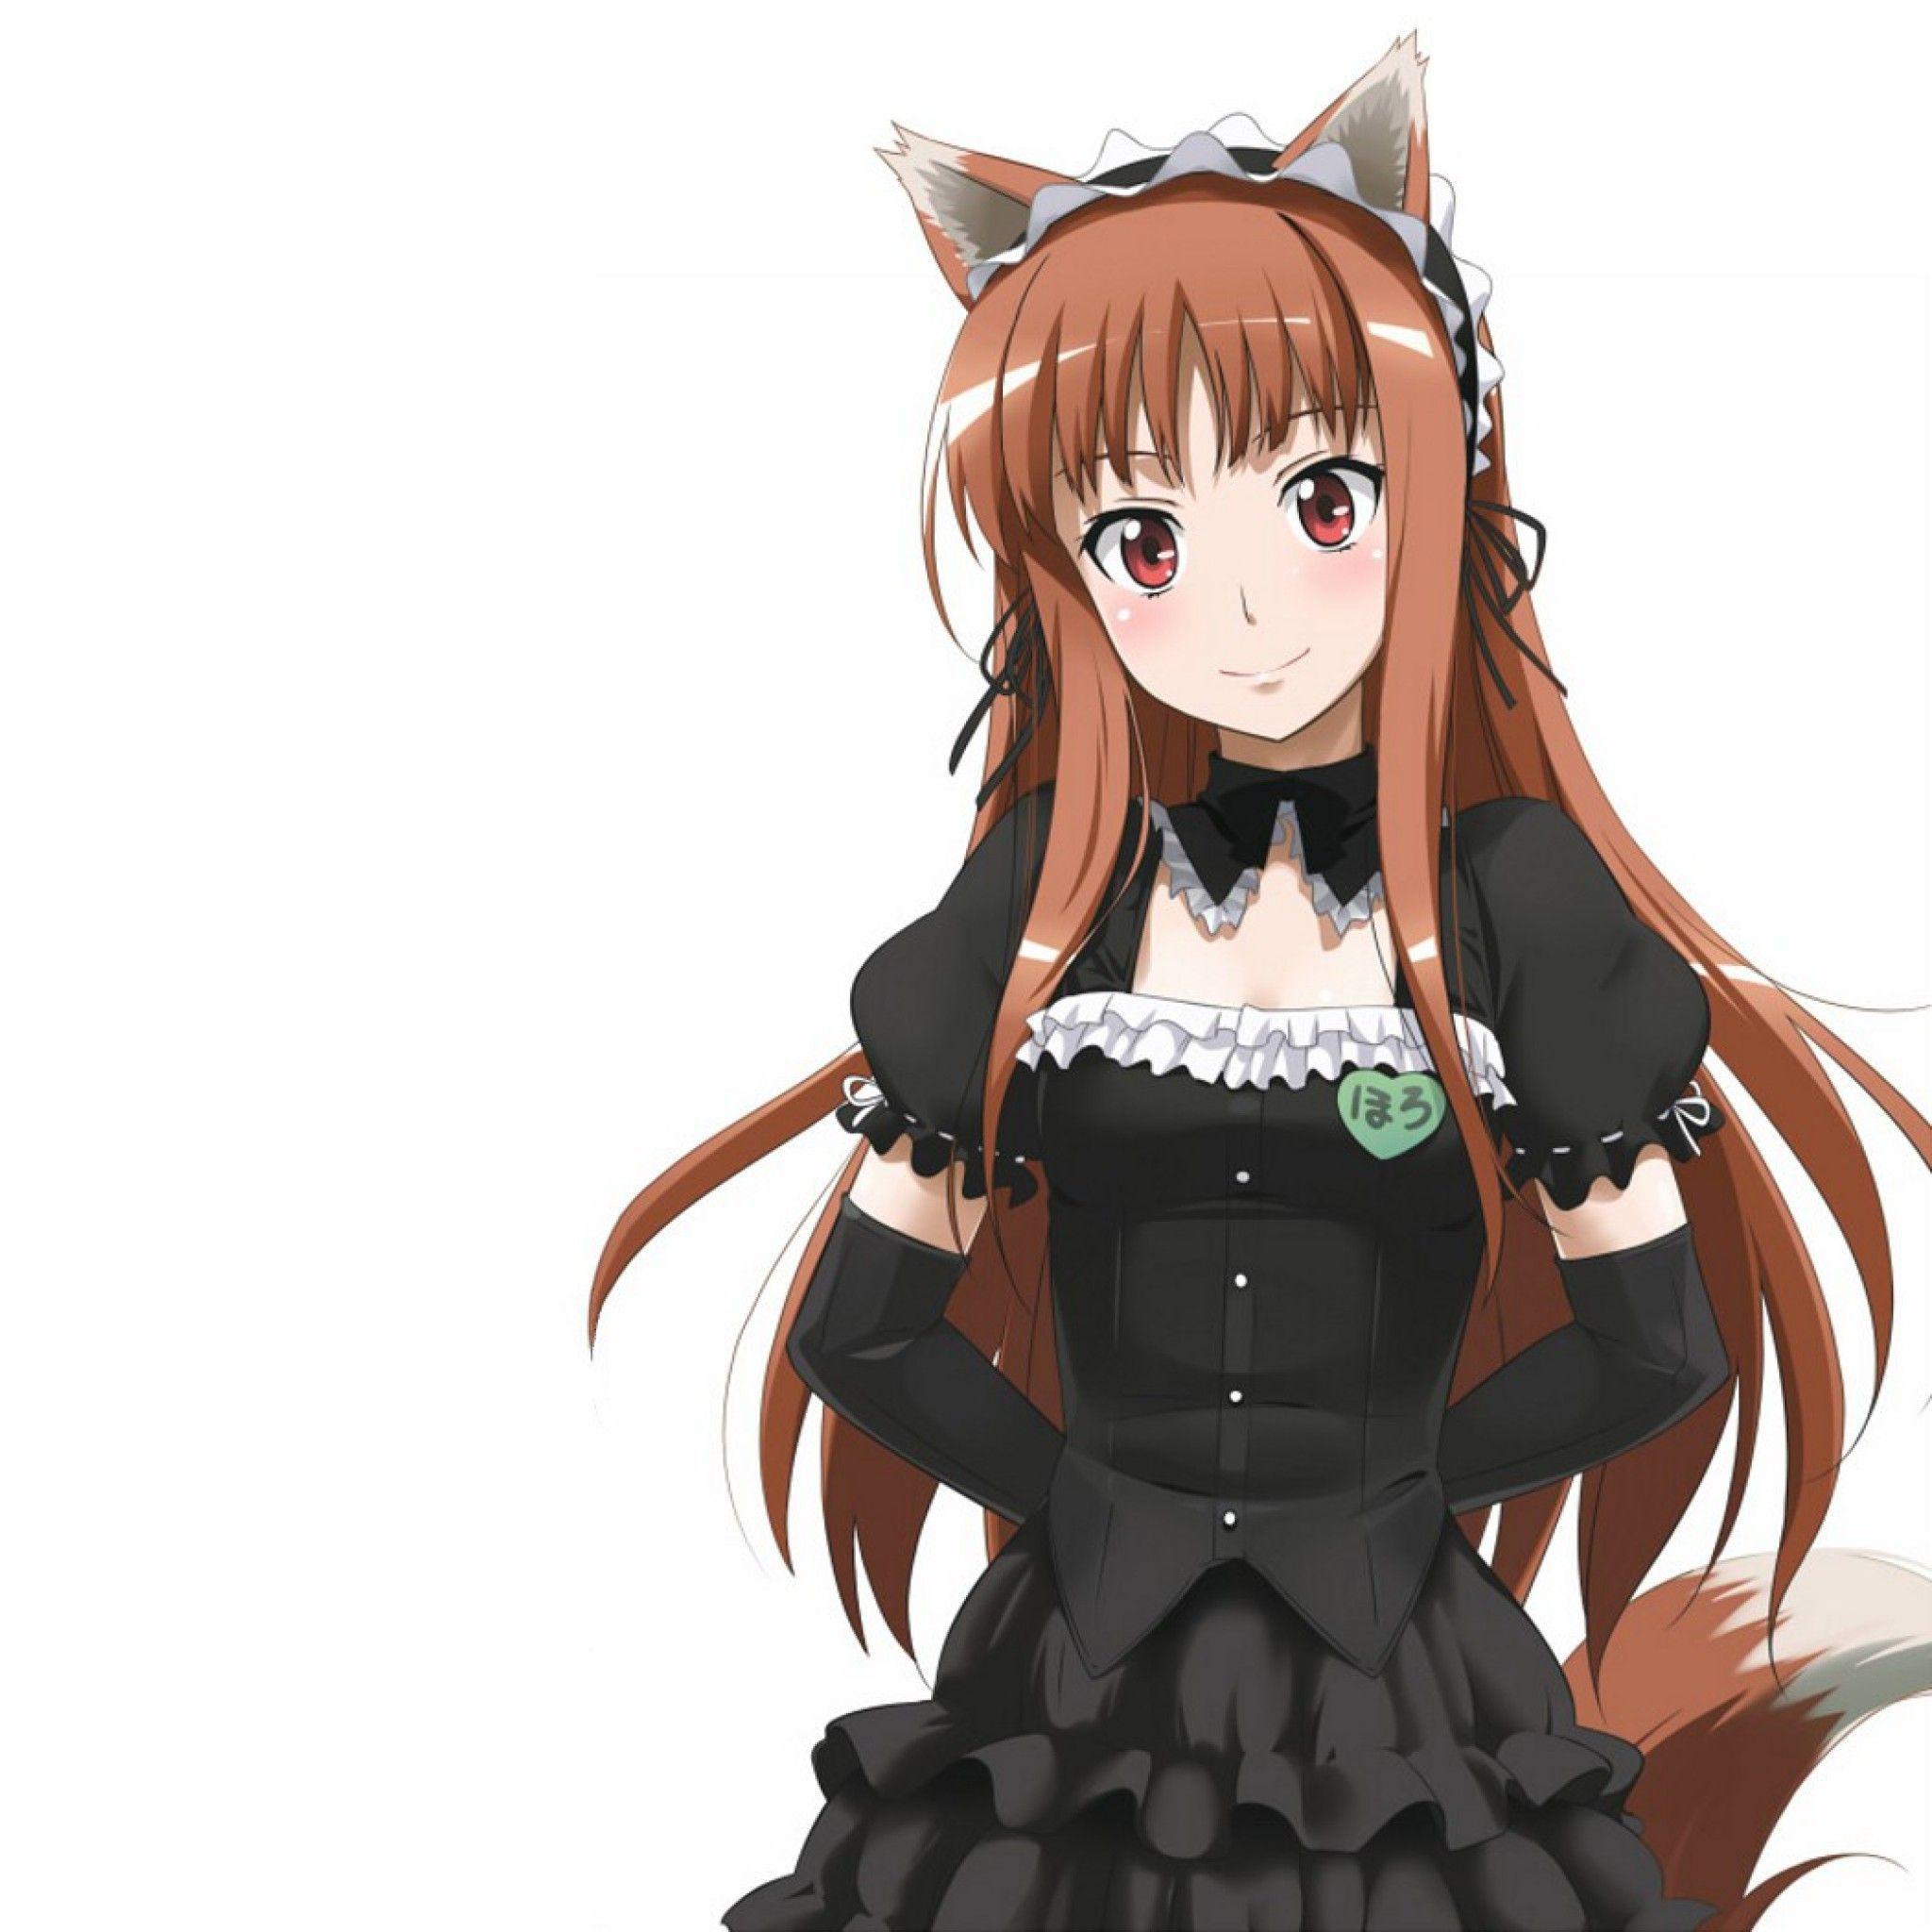 Cute Anime Wolf Girl Wallpapers - Top Free Cute Anime Wolf Girl